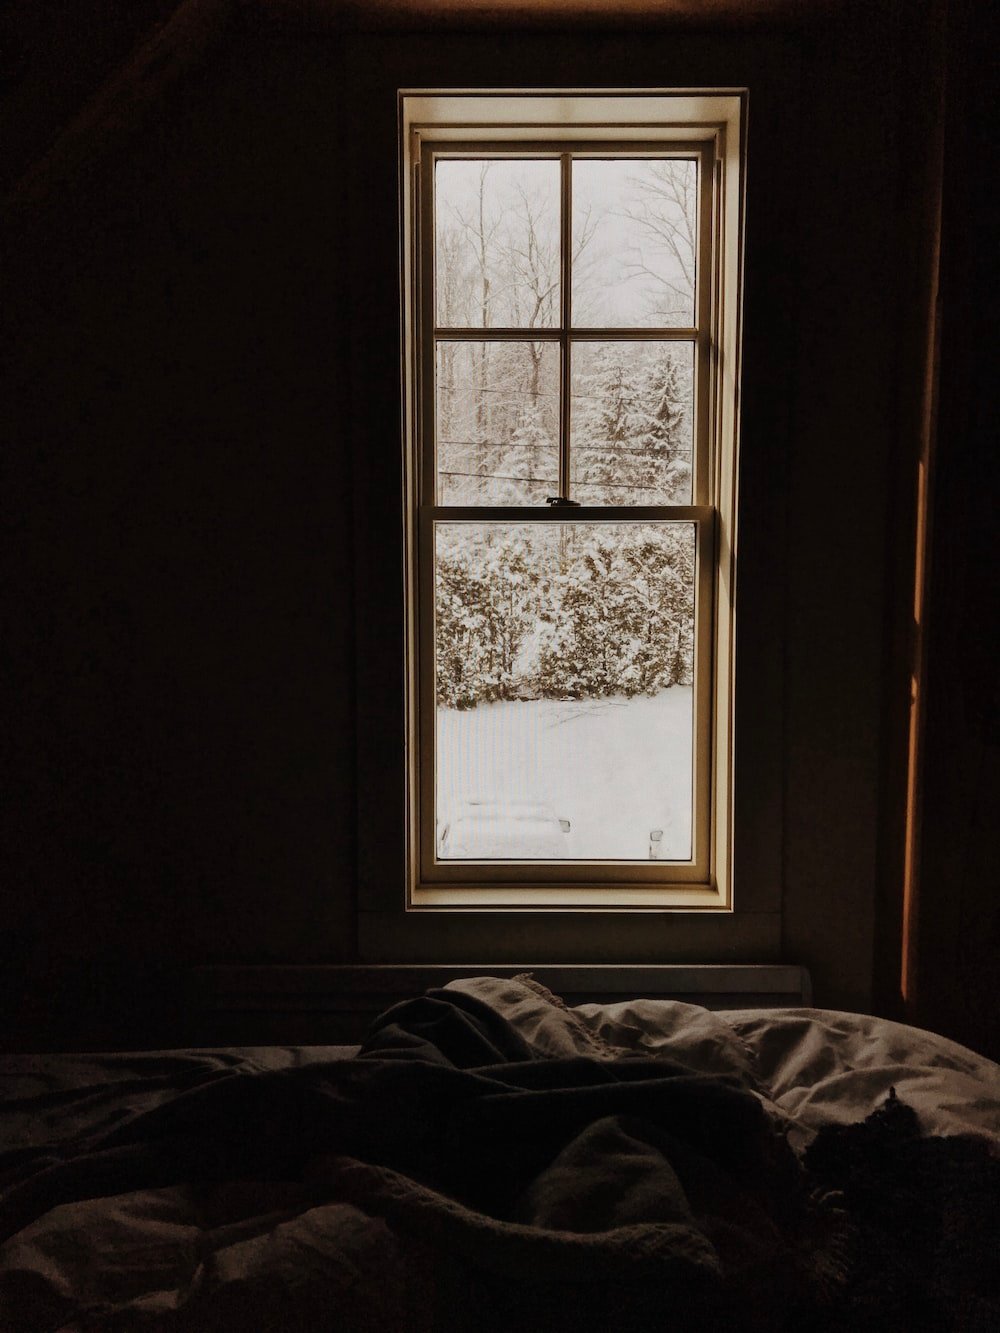 Bedroom Window Picture. Download Free Image